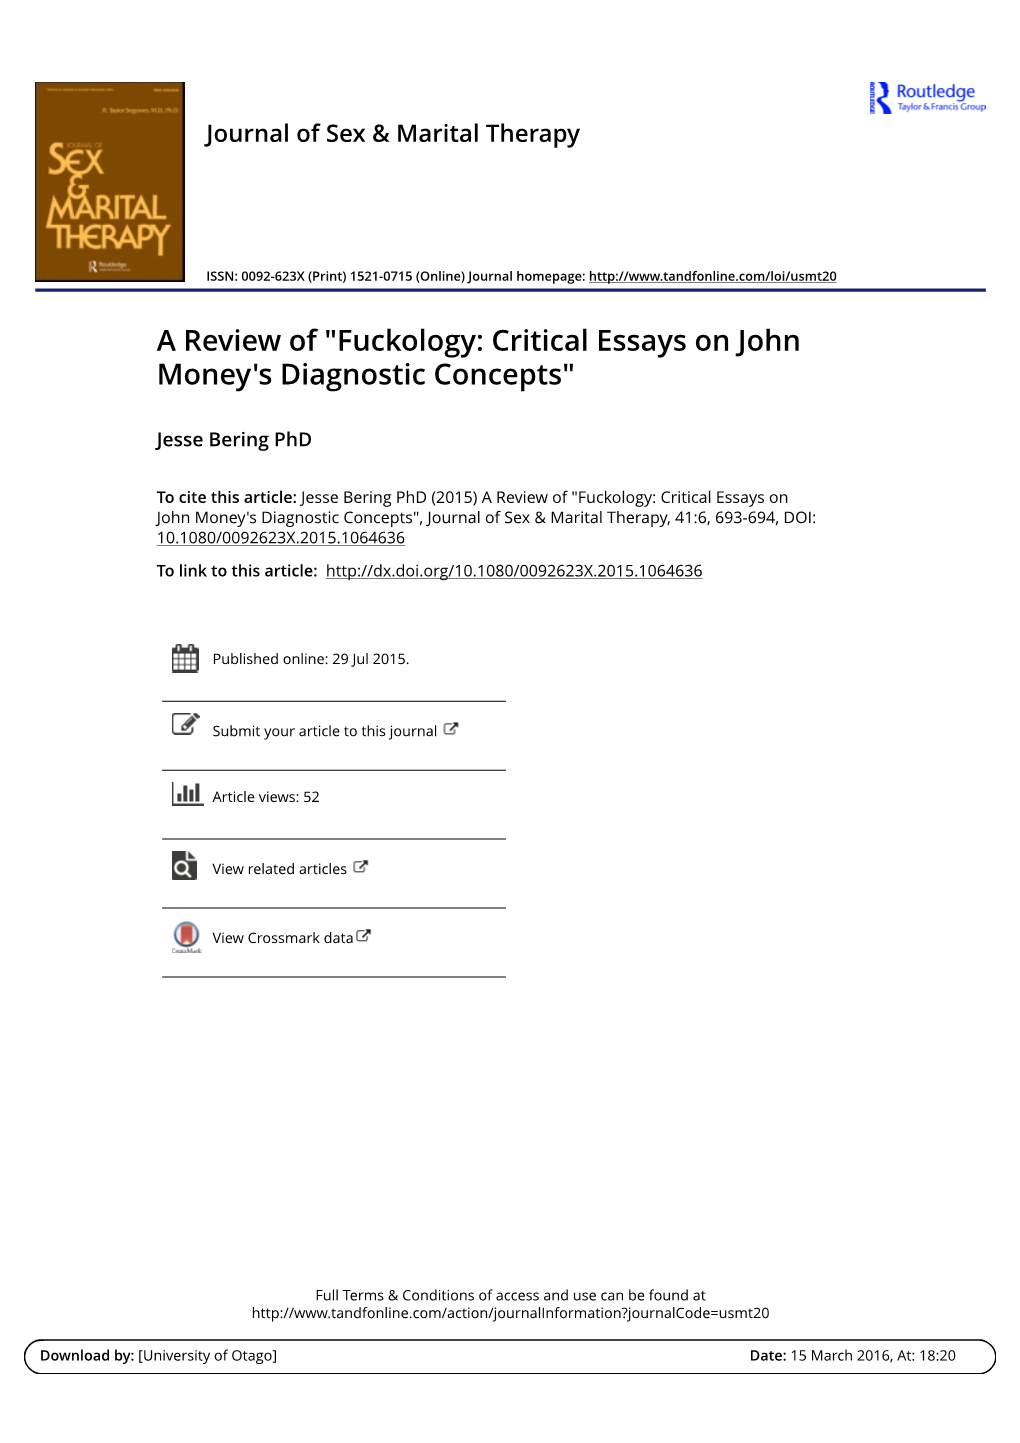 Fuckology: Critical Essays on John Money's Diagnostic Concepts"